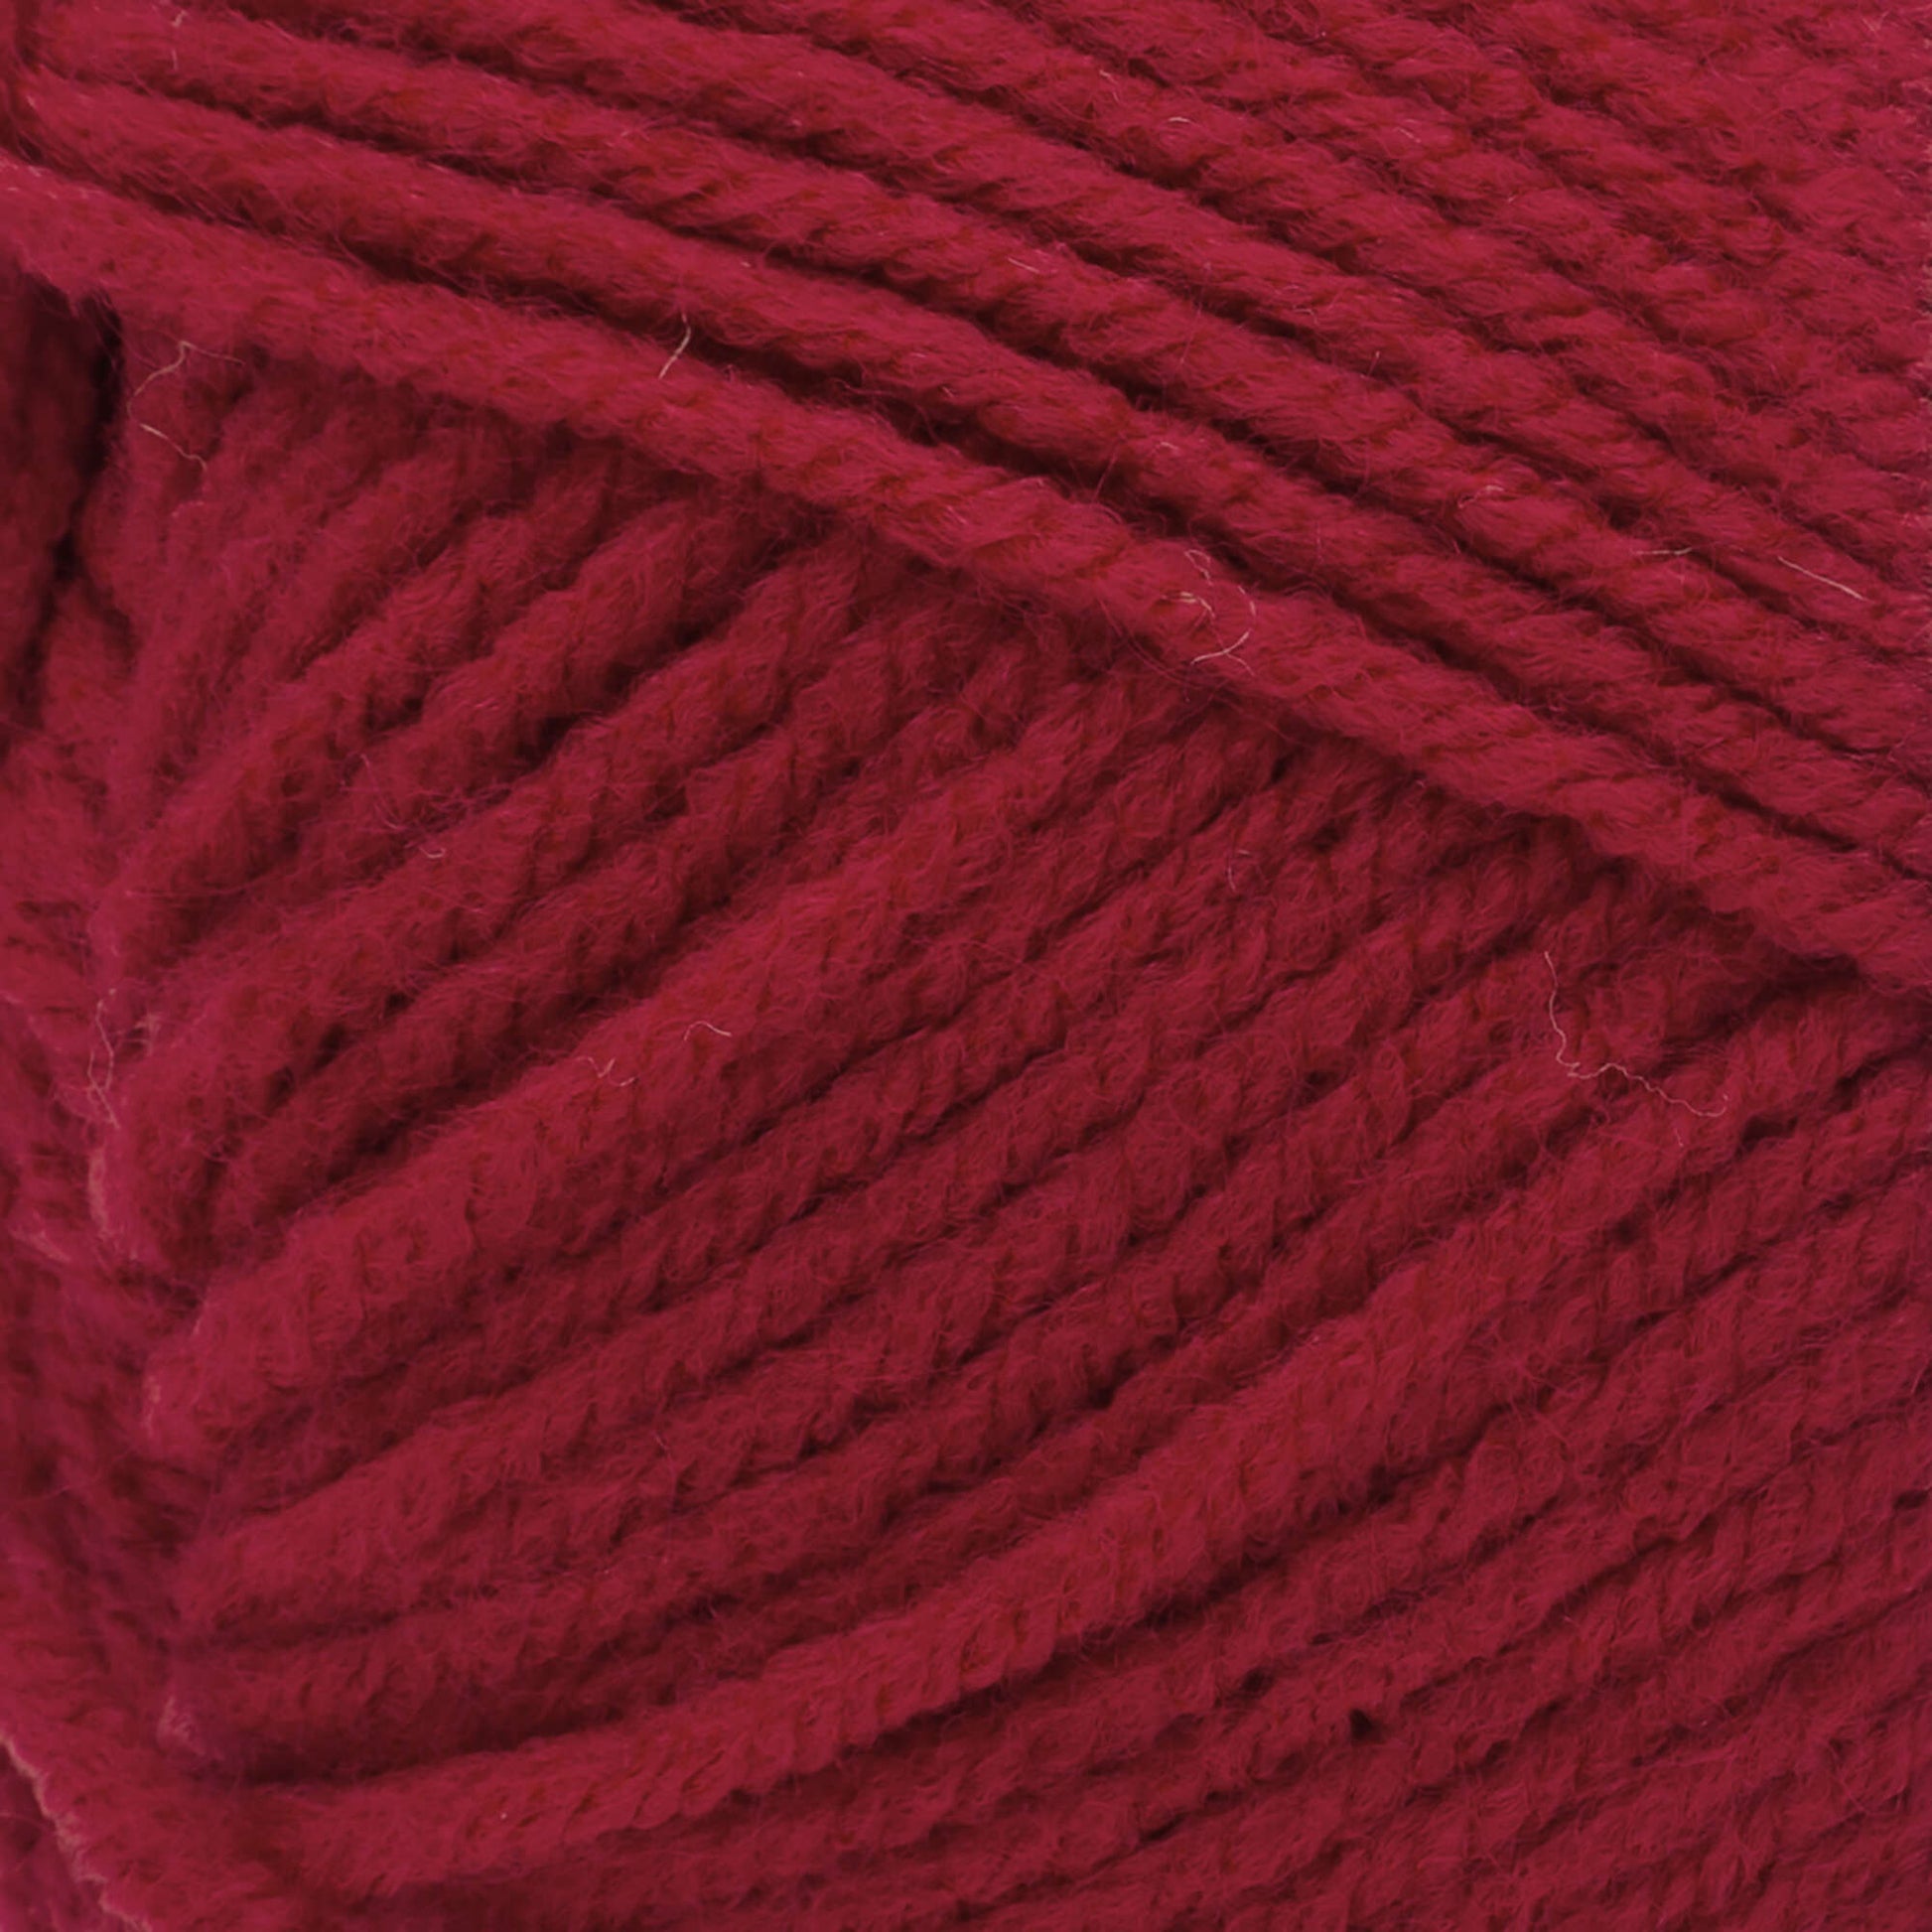 Red Heart Baby Hugs Medium Yarn - Discontinued shades